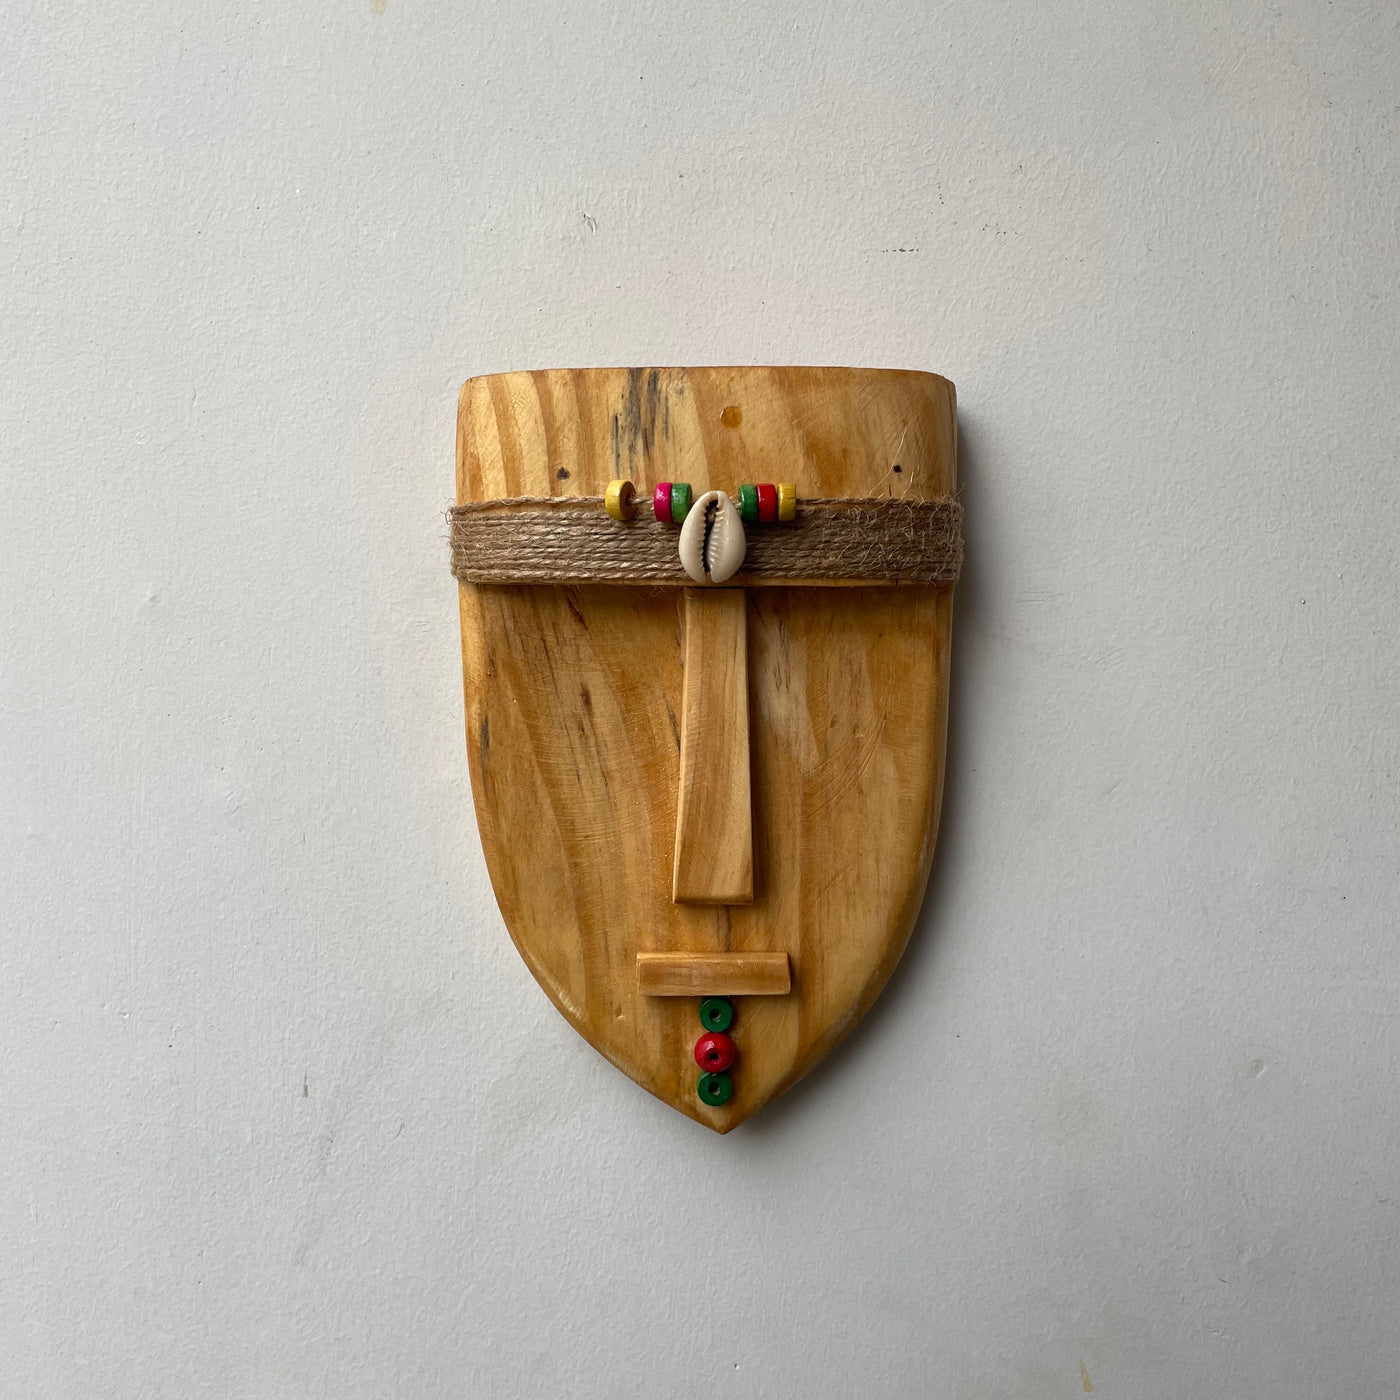 Wooden tribal boho style small mask